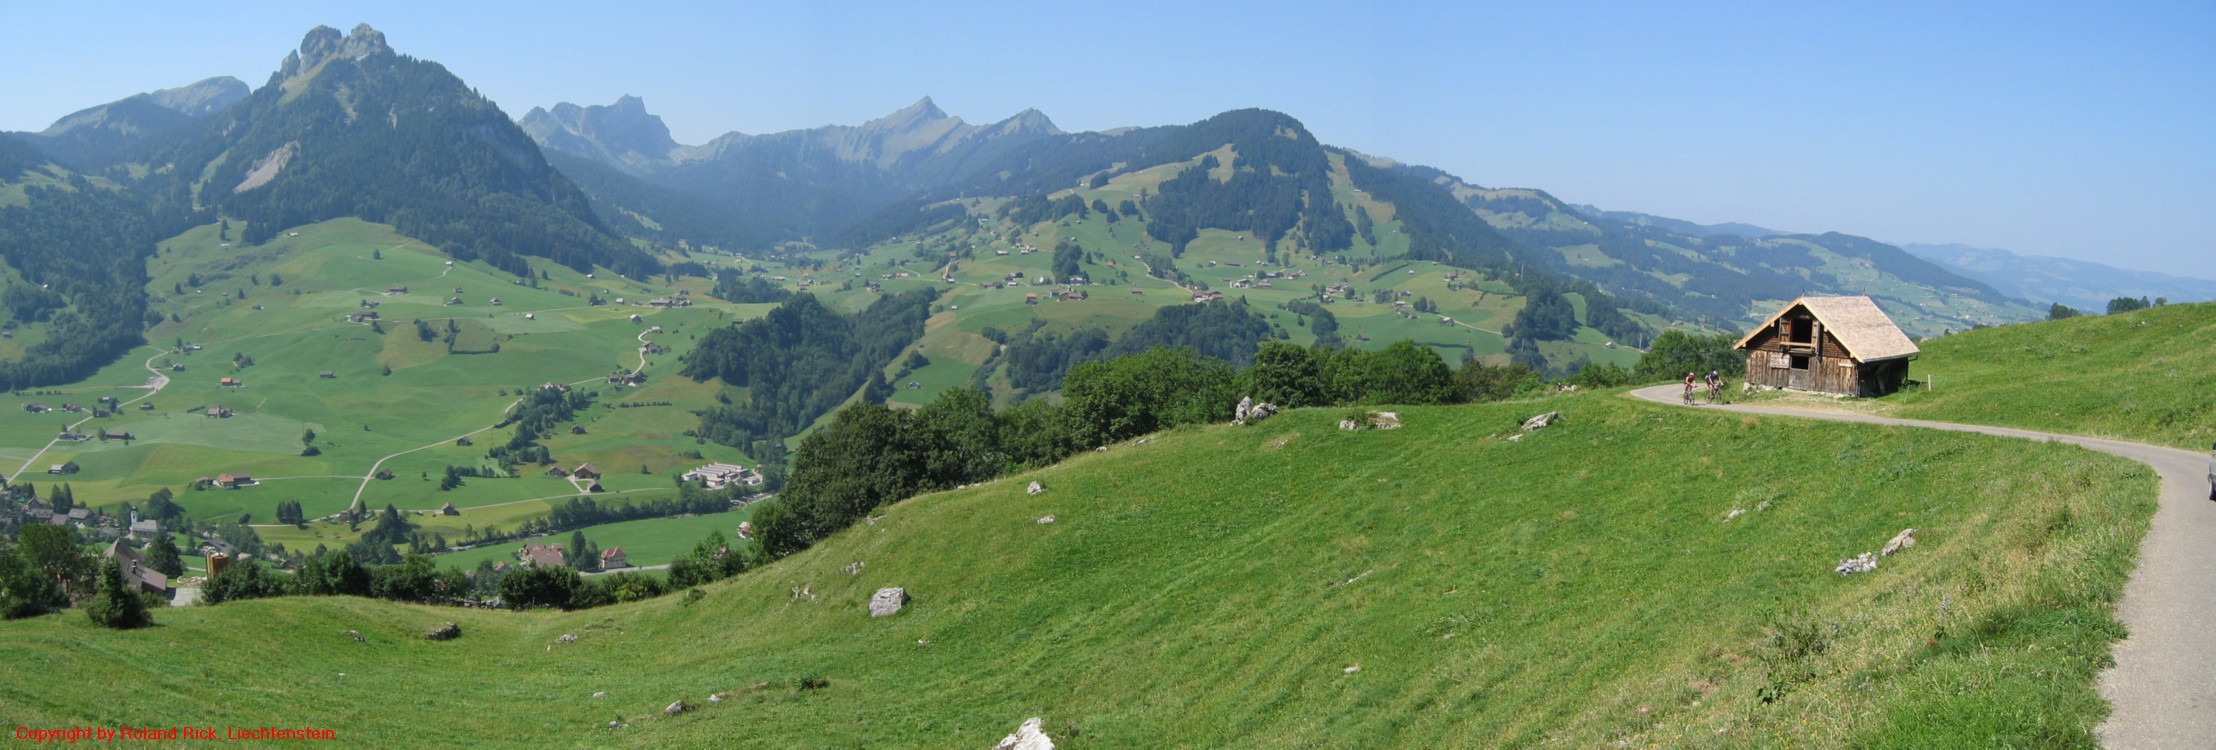 Panorama ob Stein